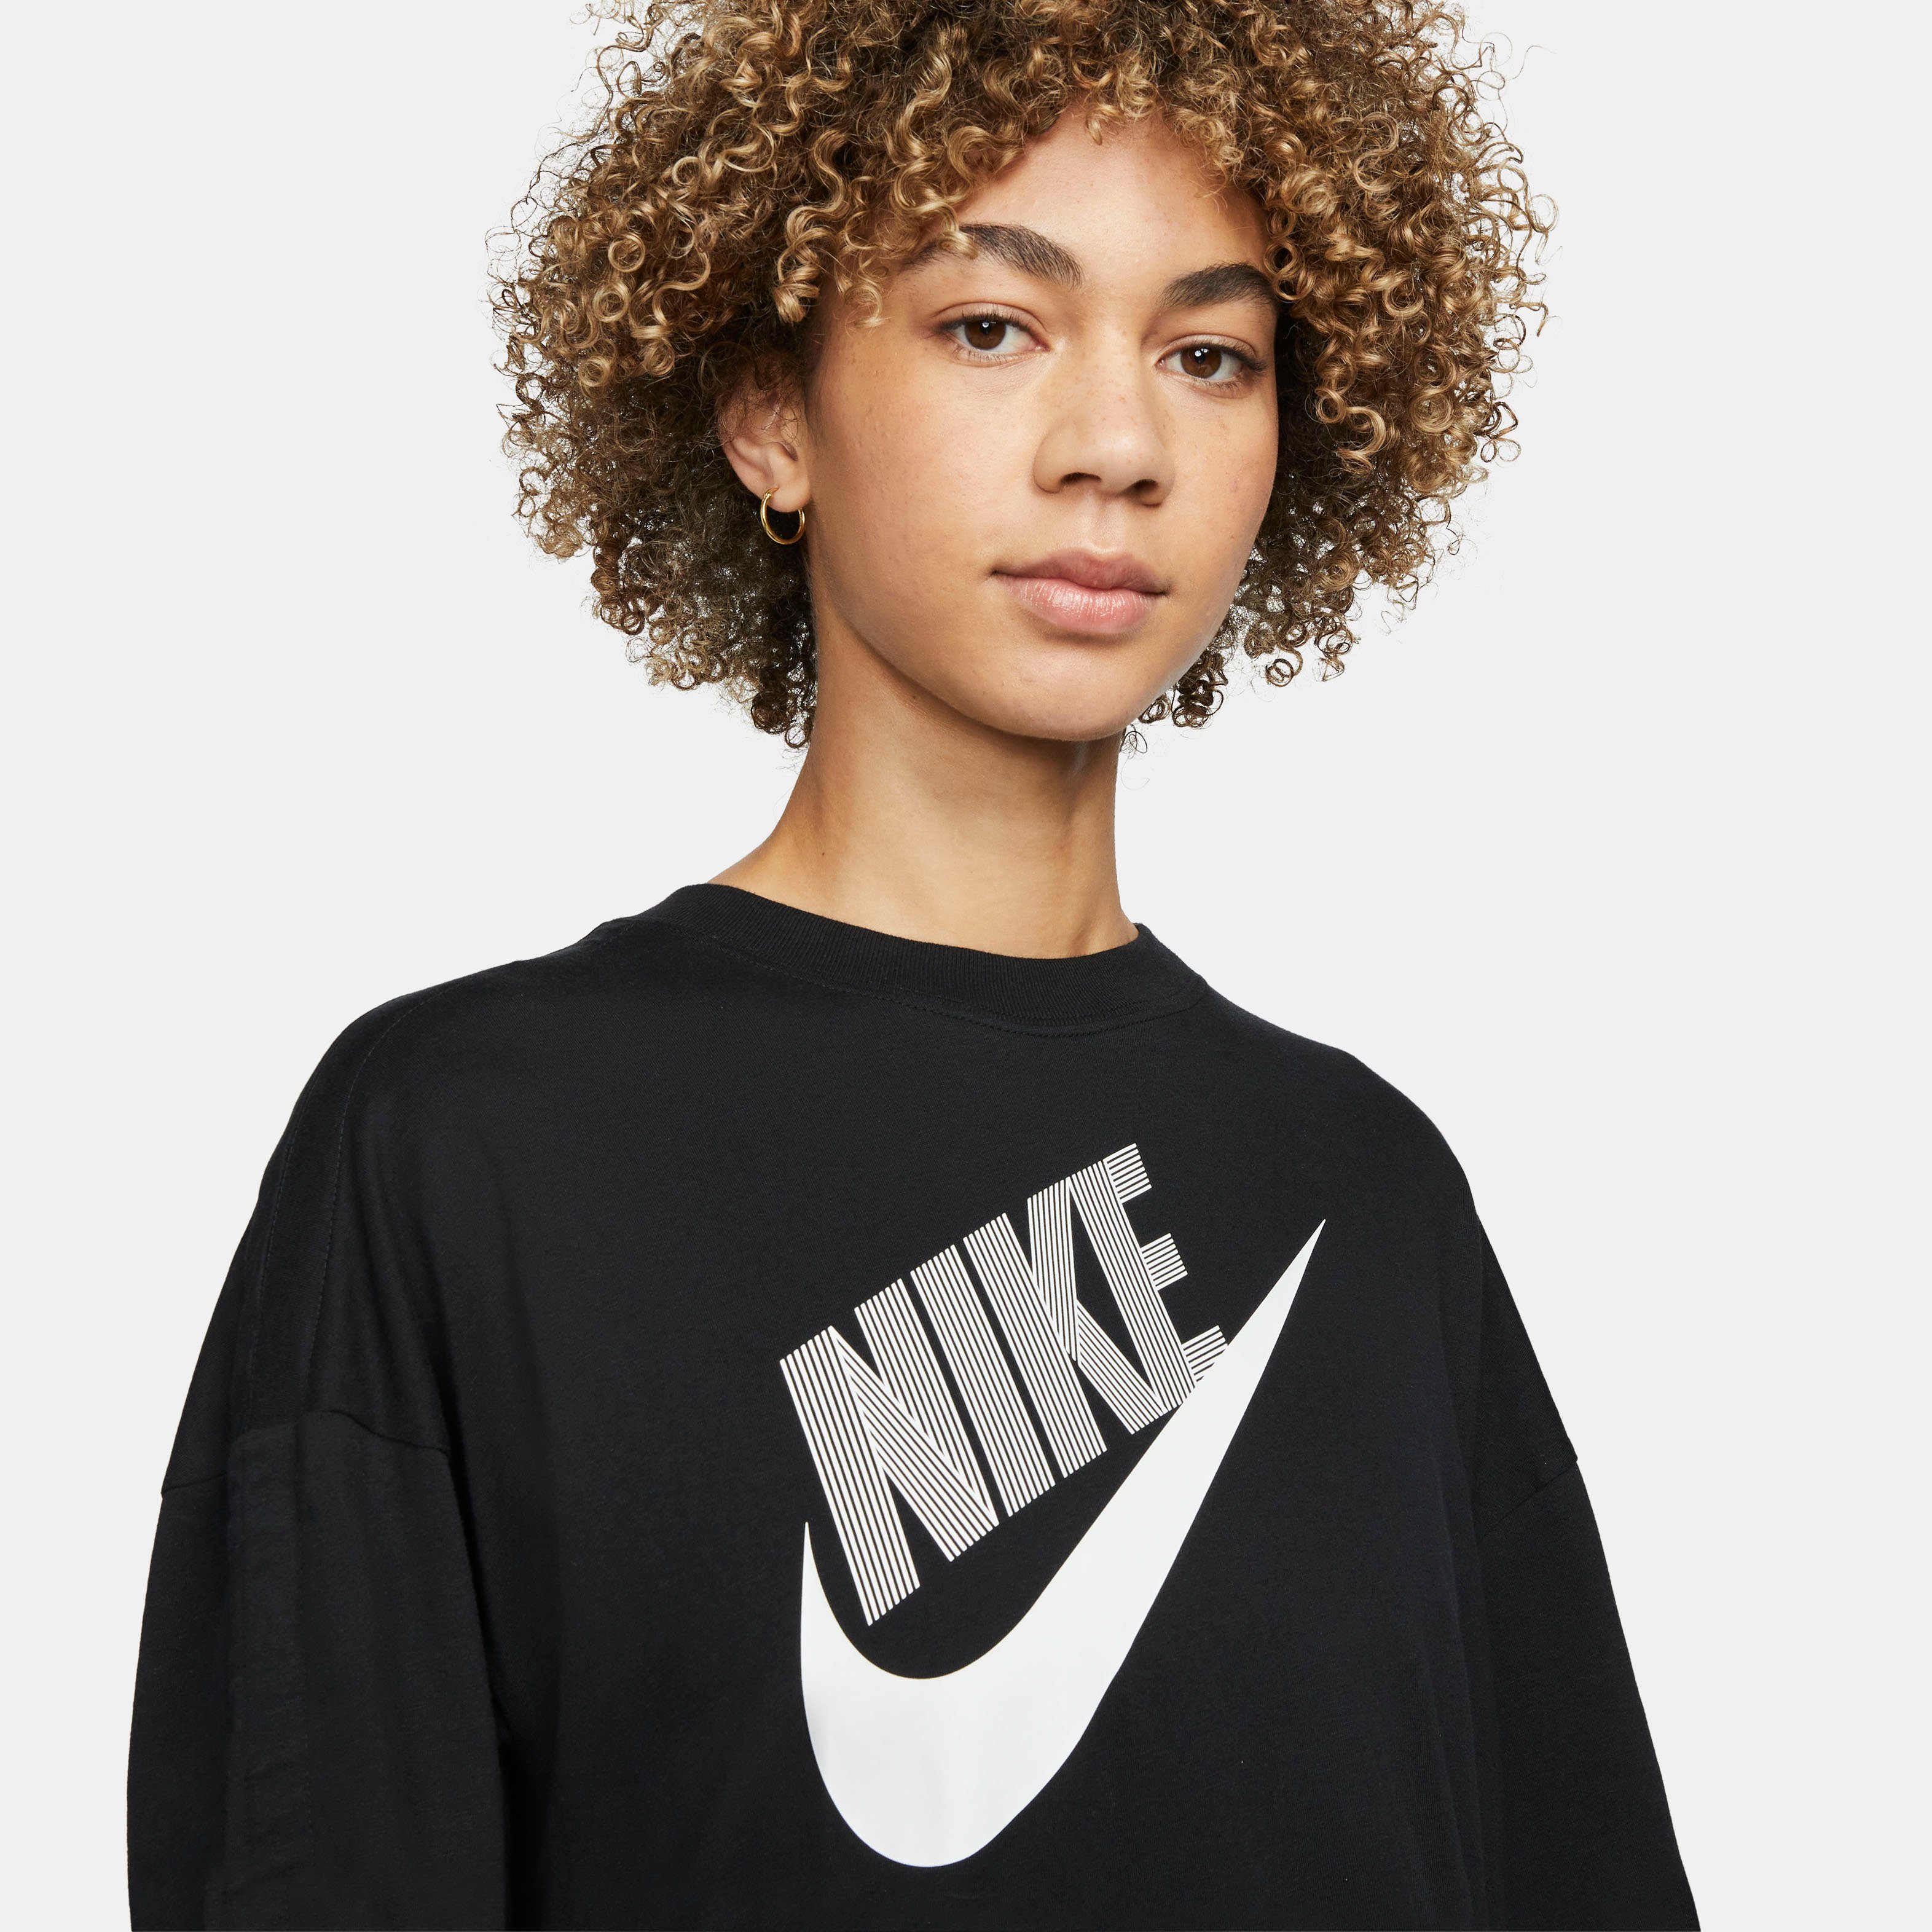 TOP T-Shirt DNC BLACK SS NSW W Sportswear Nike